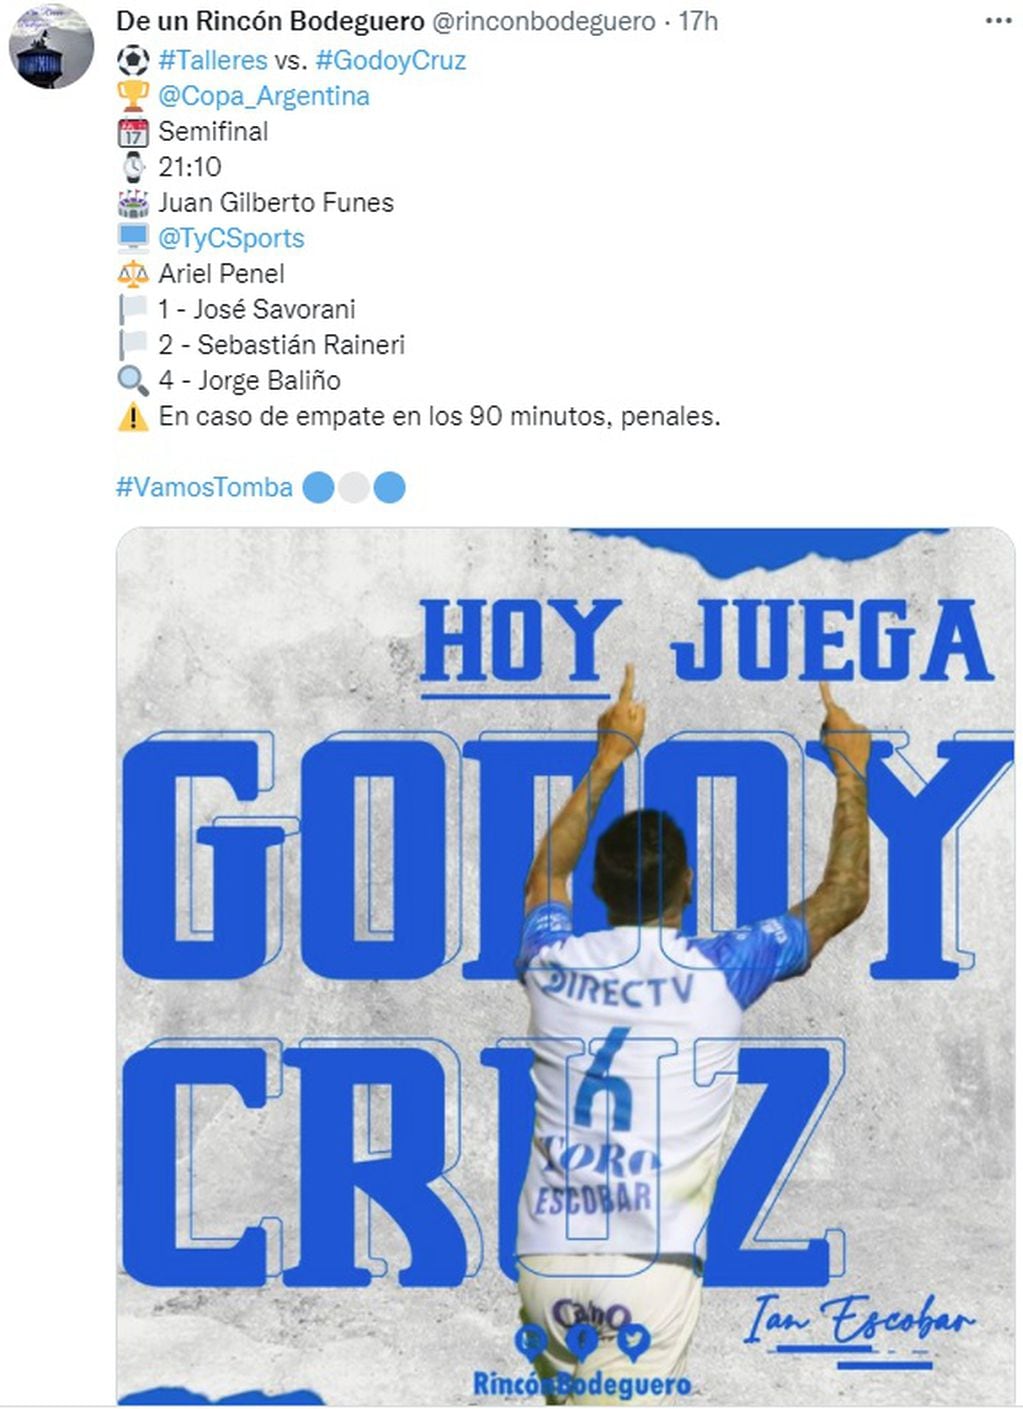 Godoy Cruz - Copa Argentina